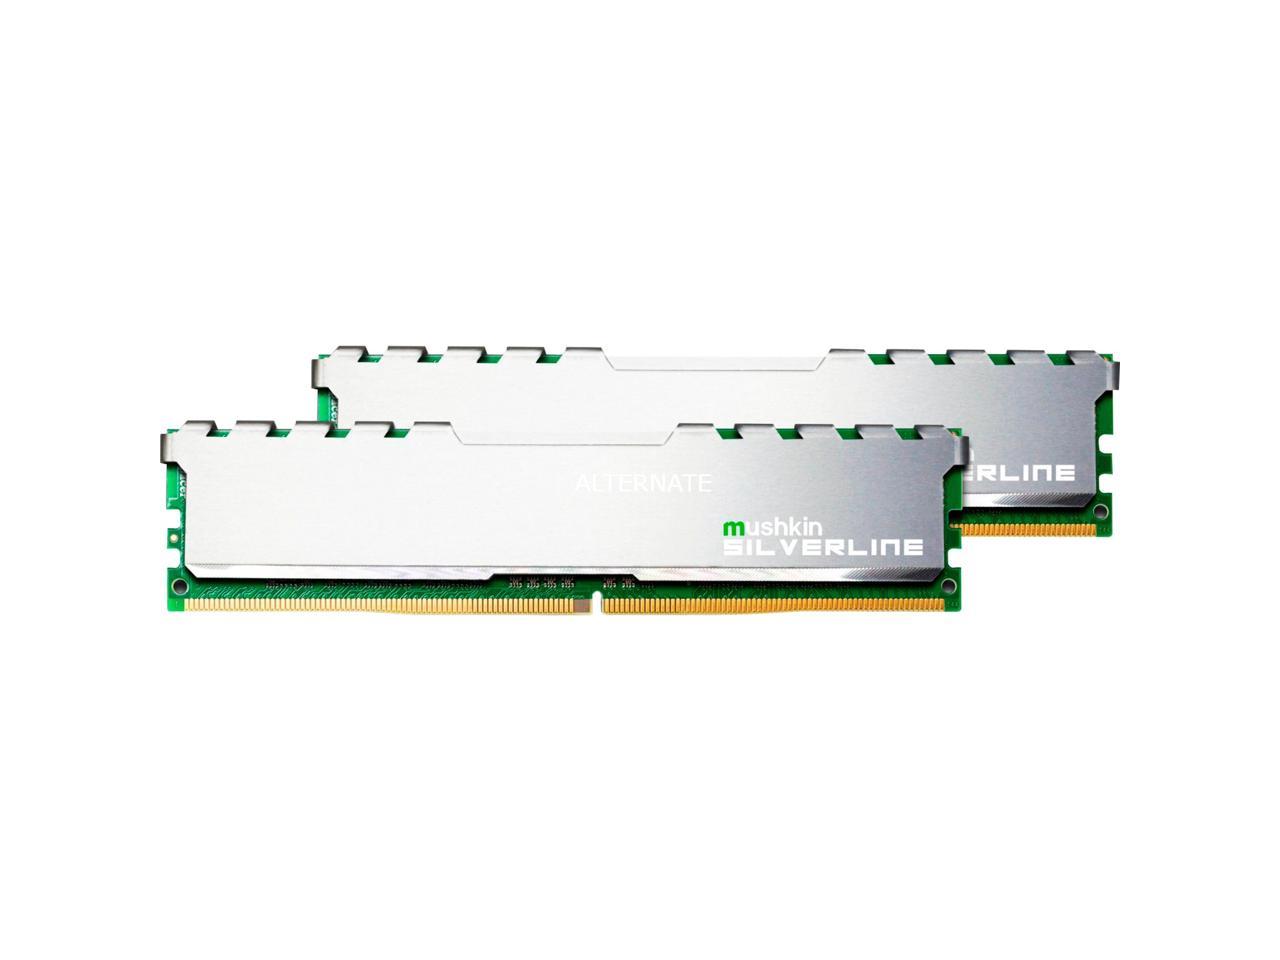 Mushkin Silverline 8GB (2X4GB) DDR4 PC4-17000 2133MHz 288-pin Desktop Memory Model MSL4U213FF4GX2